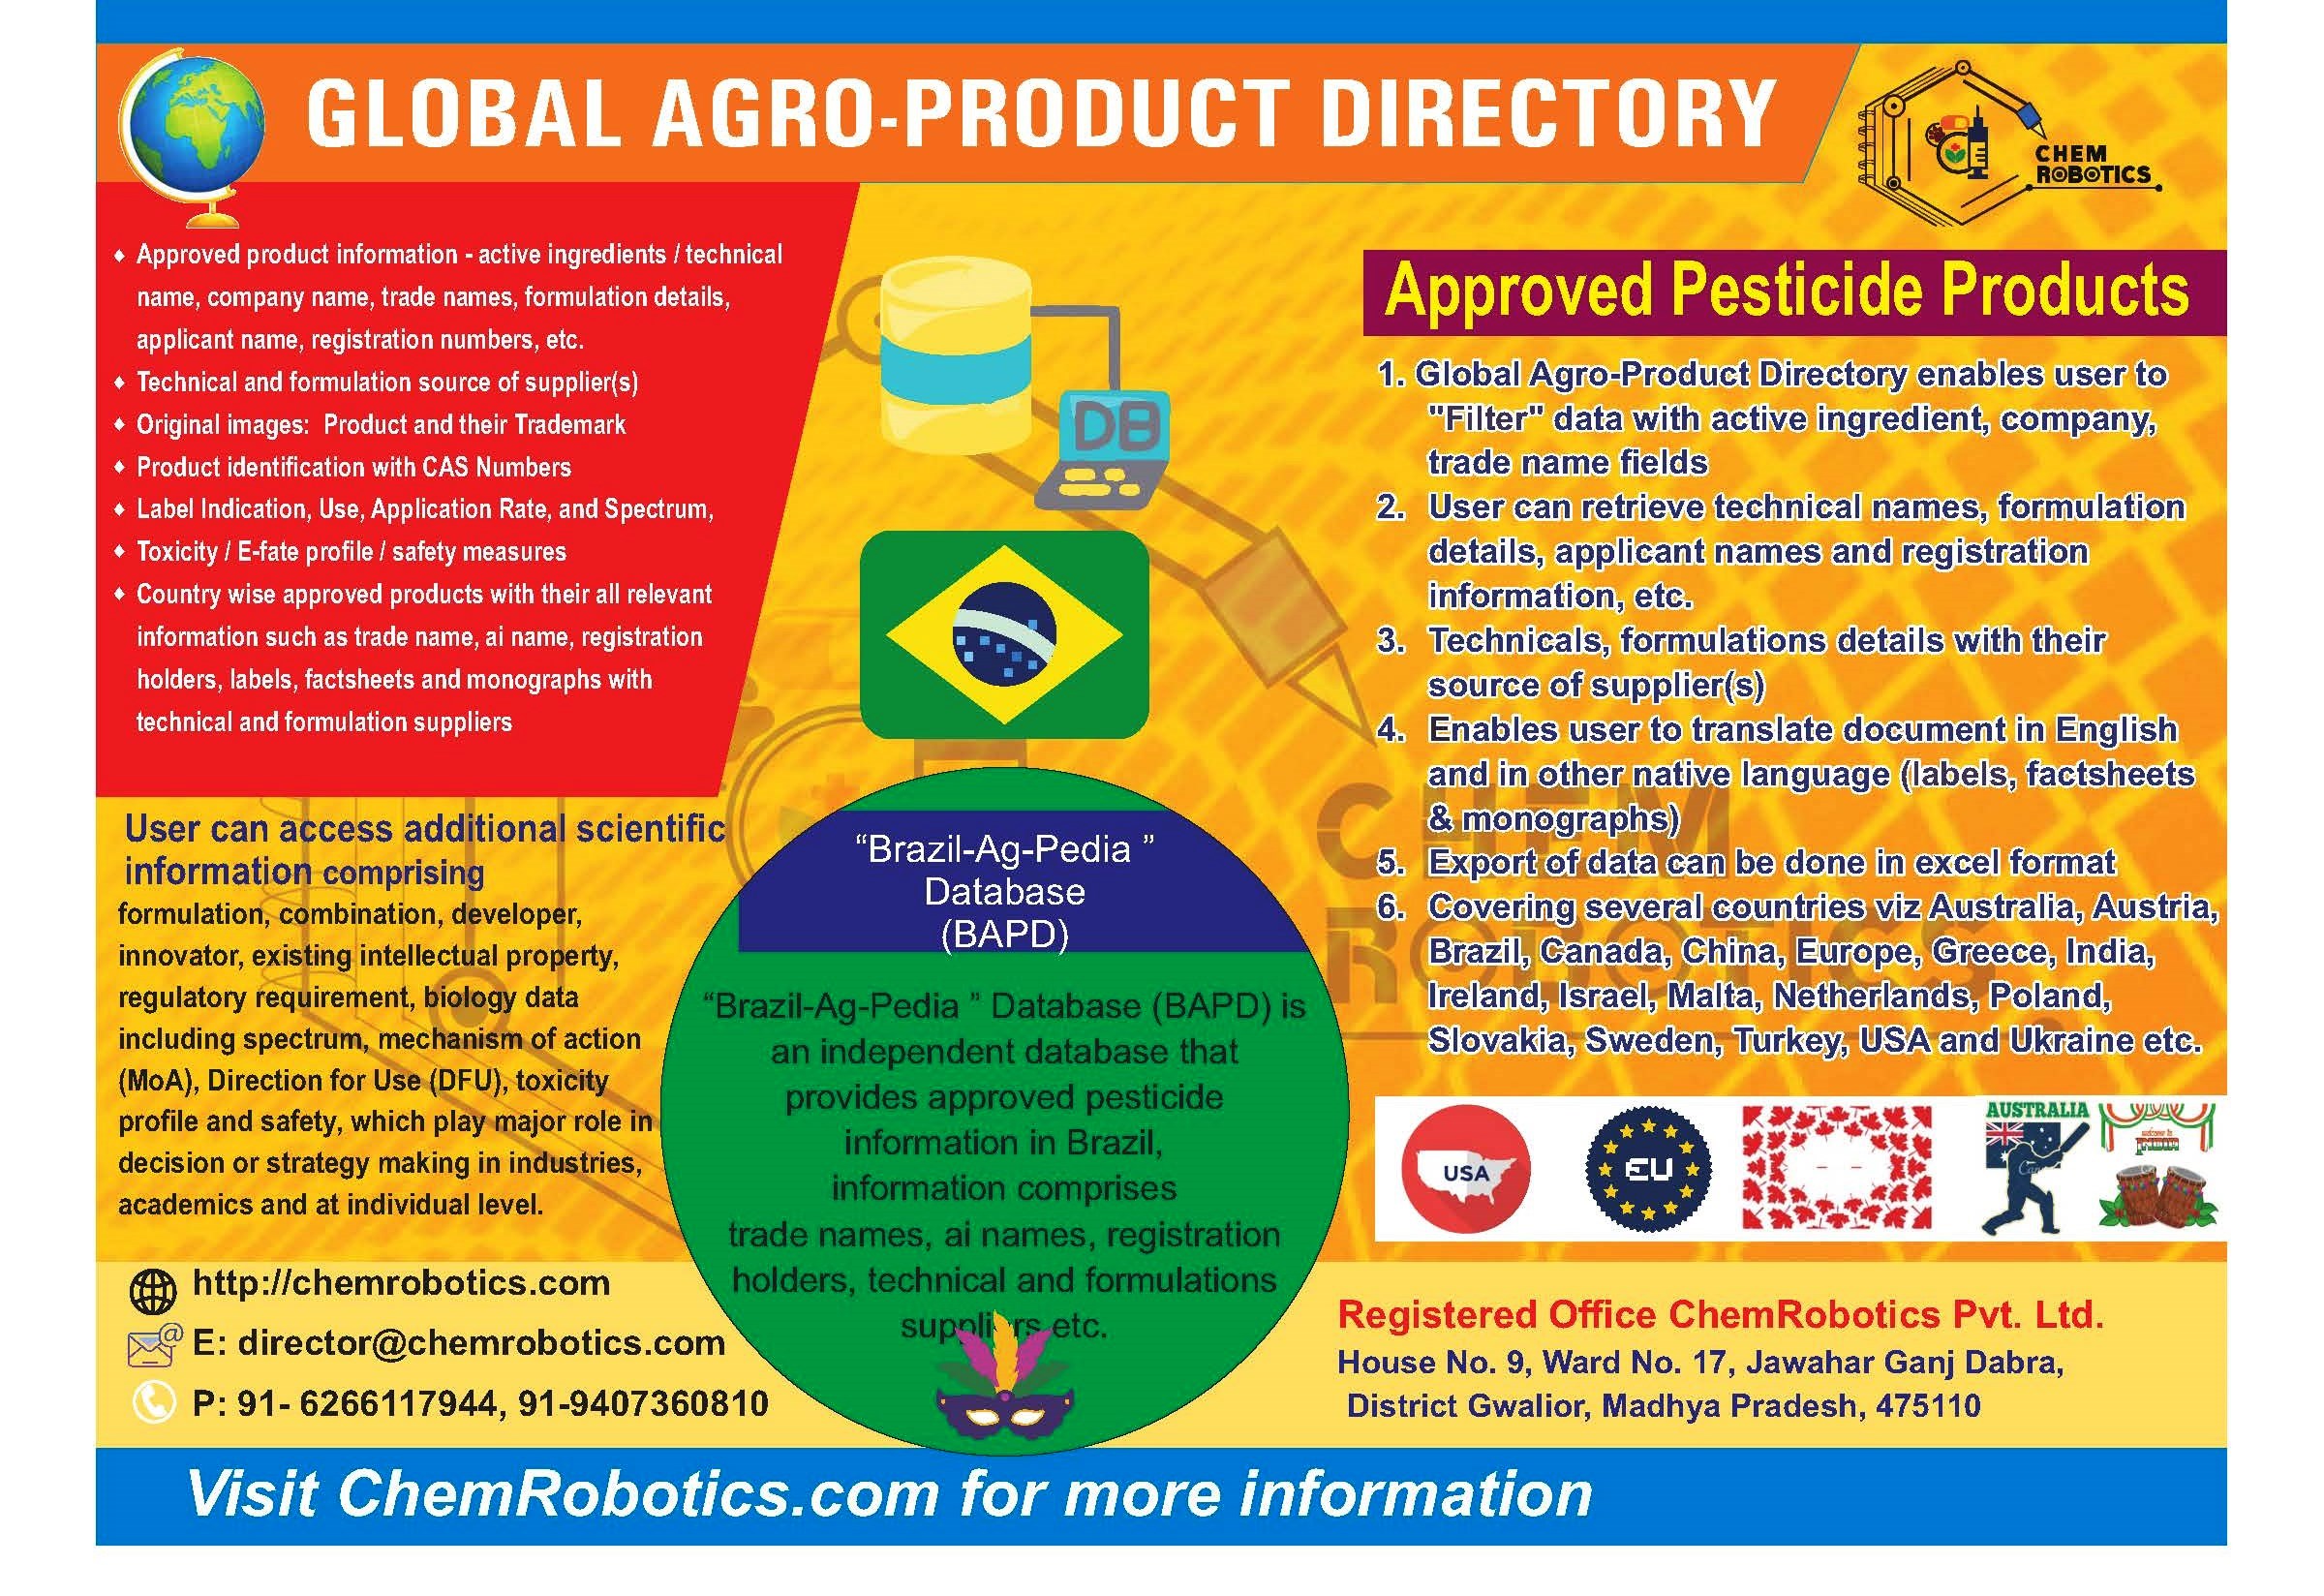 CHEMROBOTICS- Global Agro Product Directory